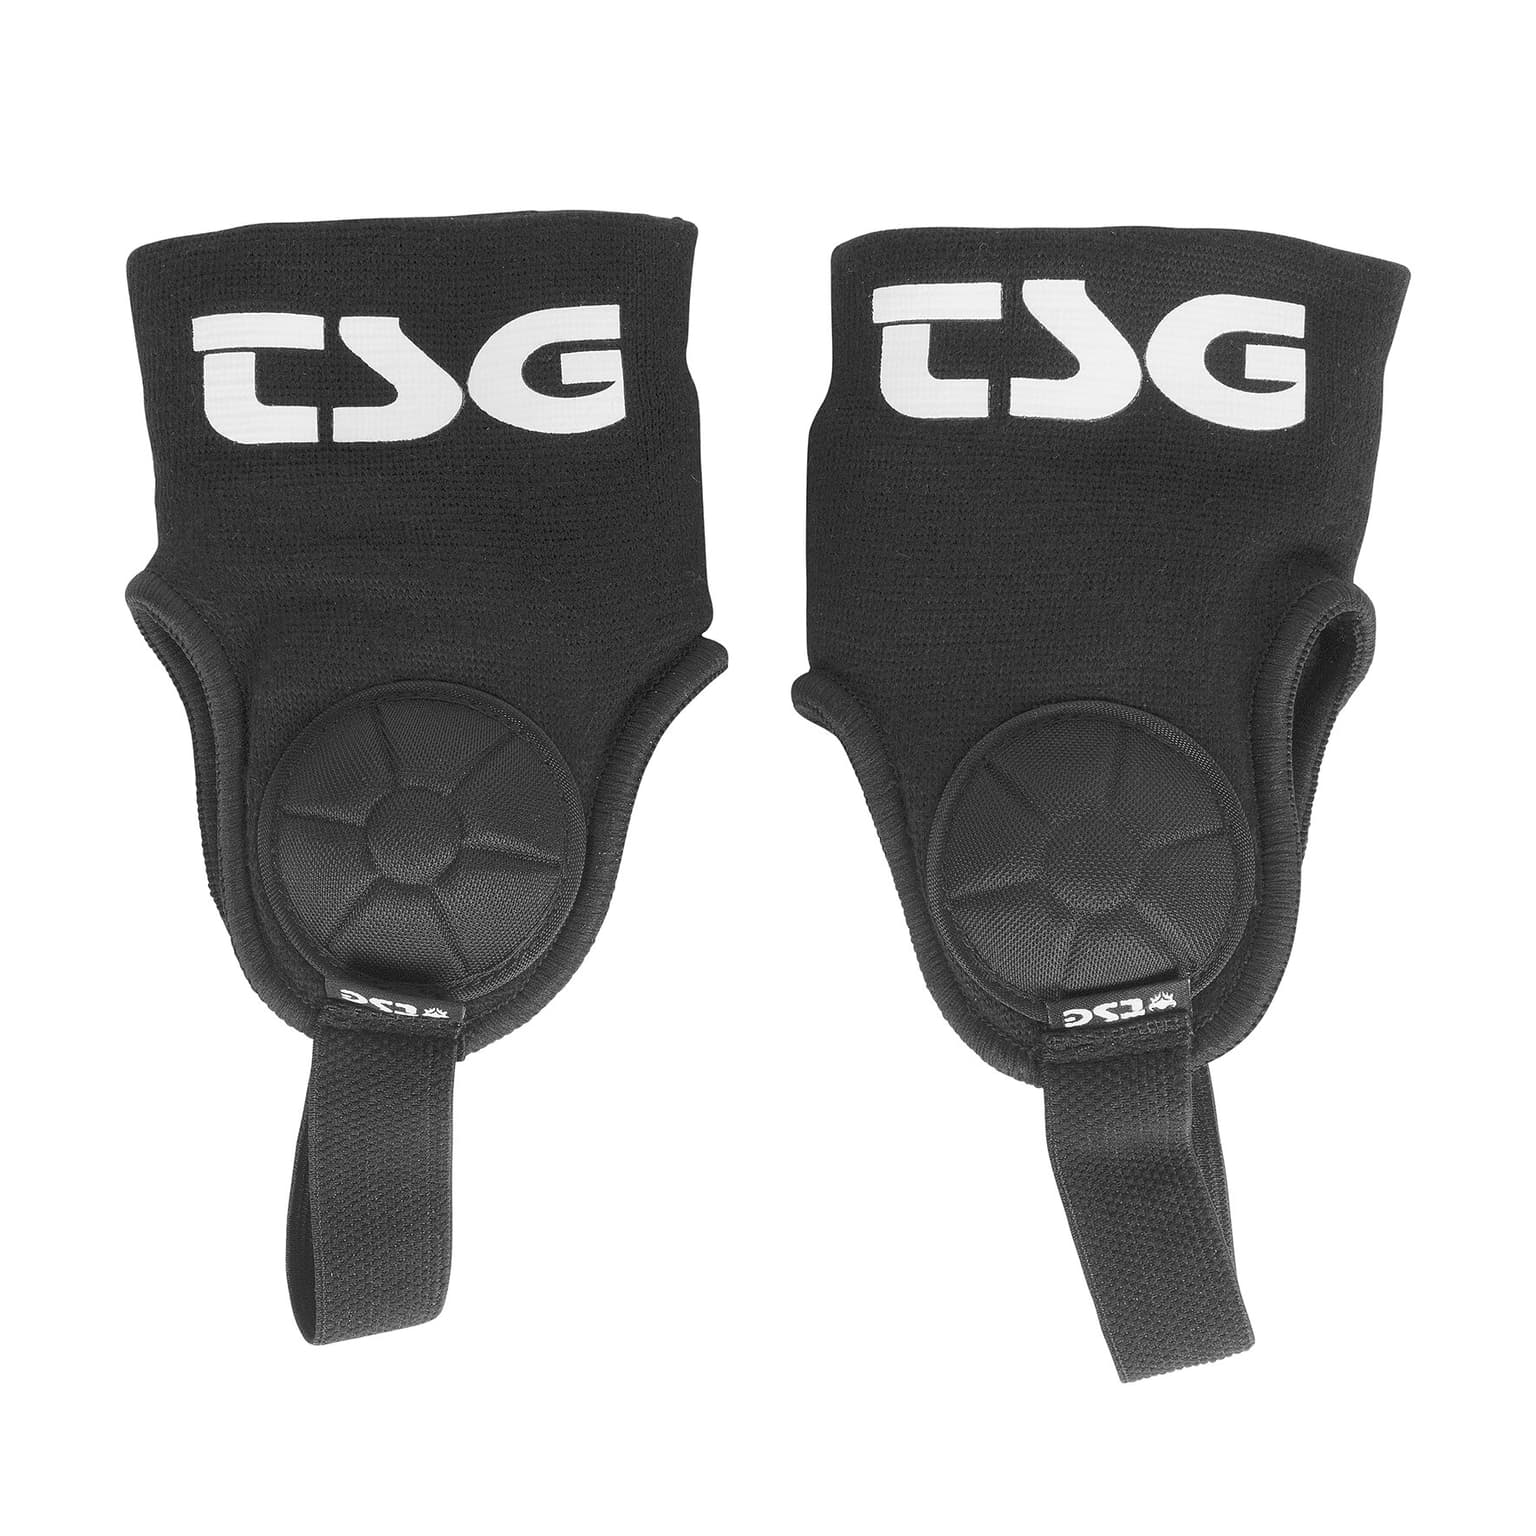 Tsg Tsg Single Ankle-Guard Cam Protektoren schwarz 2